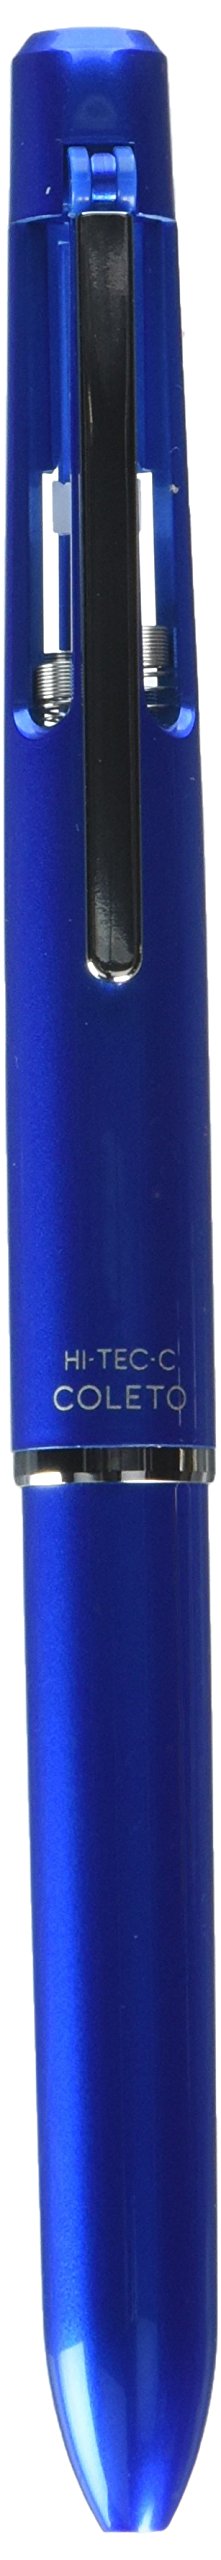 Pilot Multi Function Pen Hi-Tec-C Coleto 1000 Blue Body LHKC-1SC-L Slide Lever_1